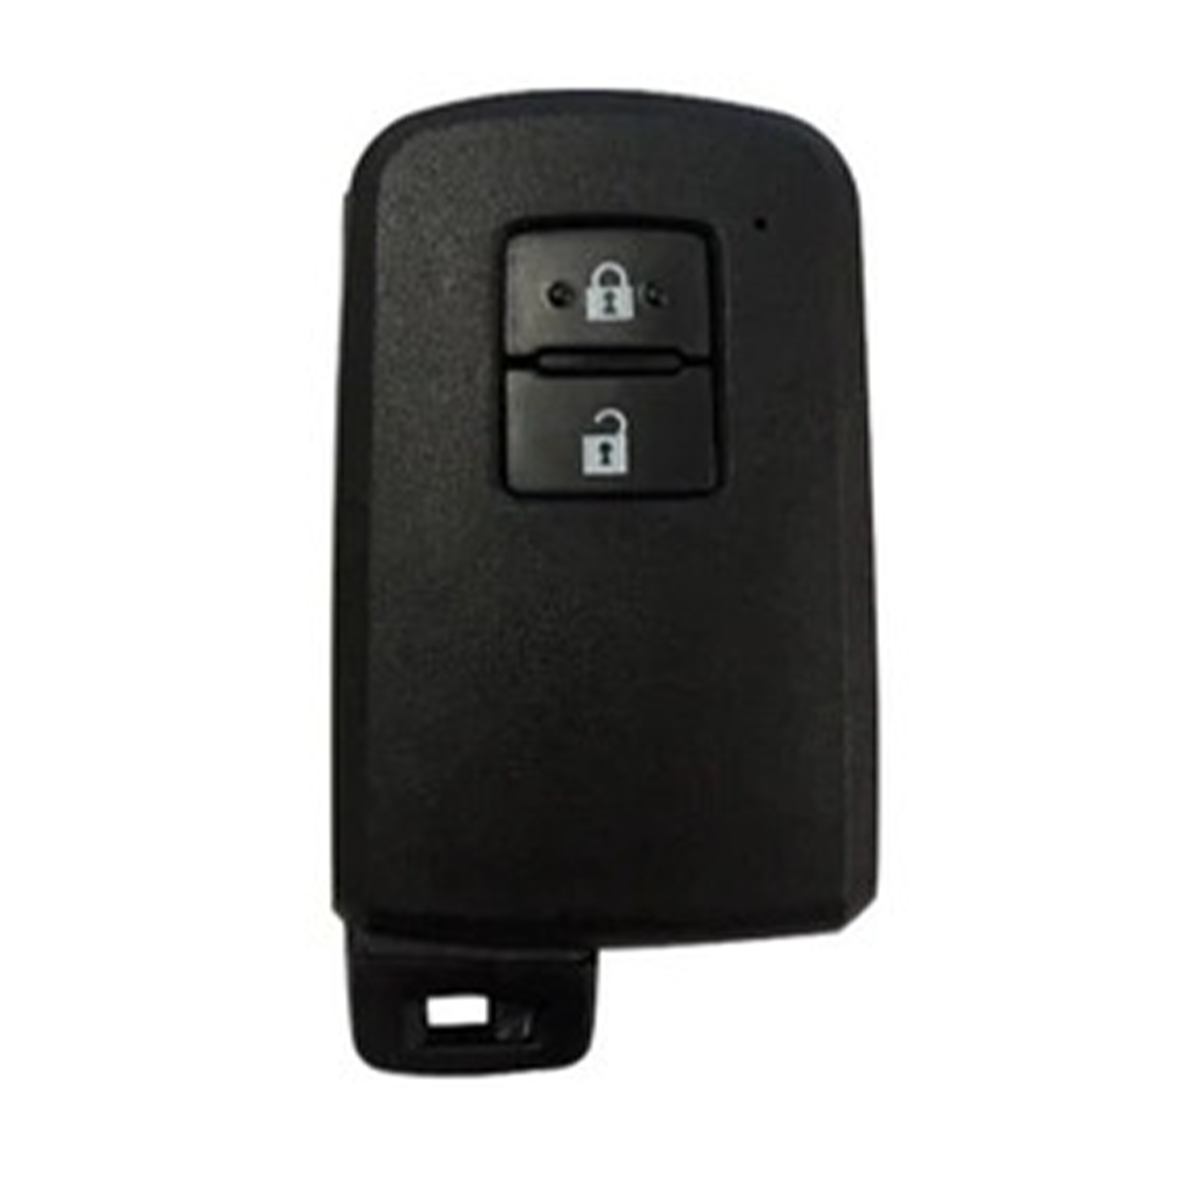 Toyota compatible 3 button smart remote 0020, 312/314Mhz